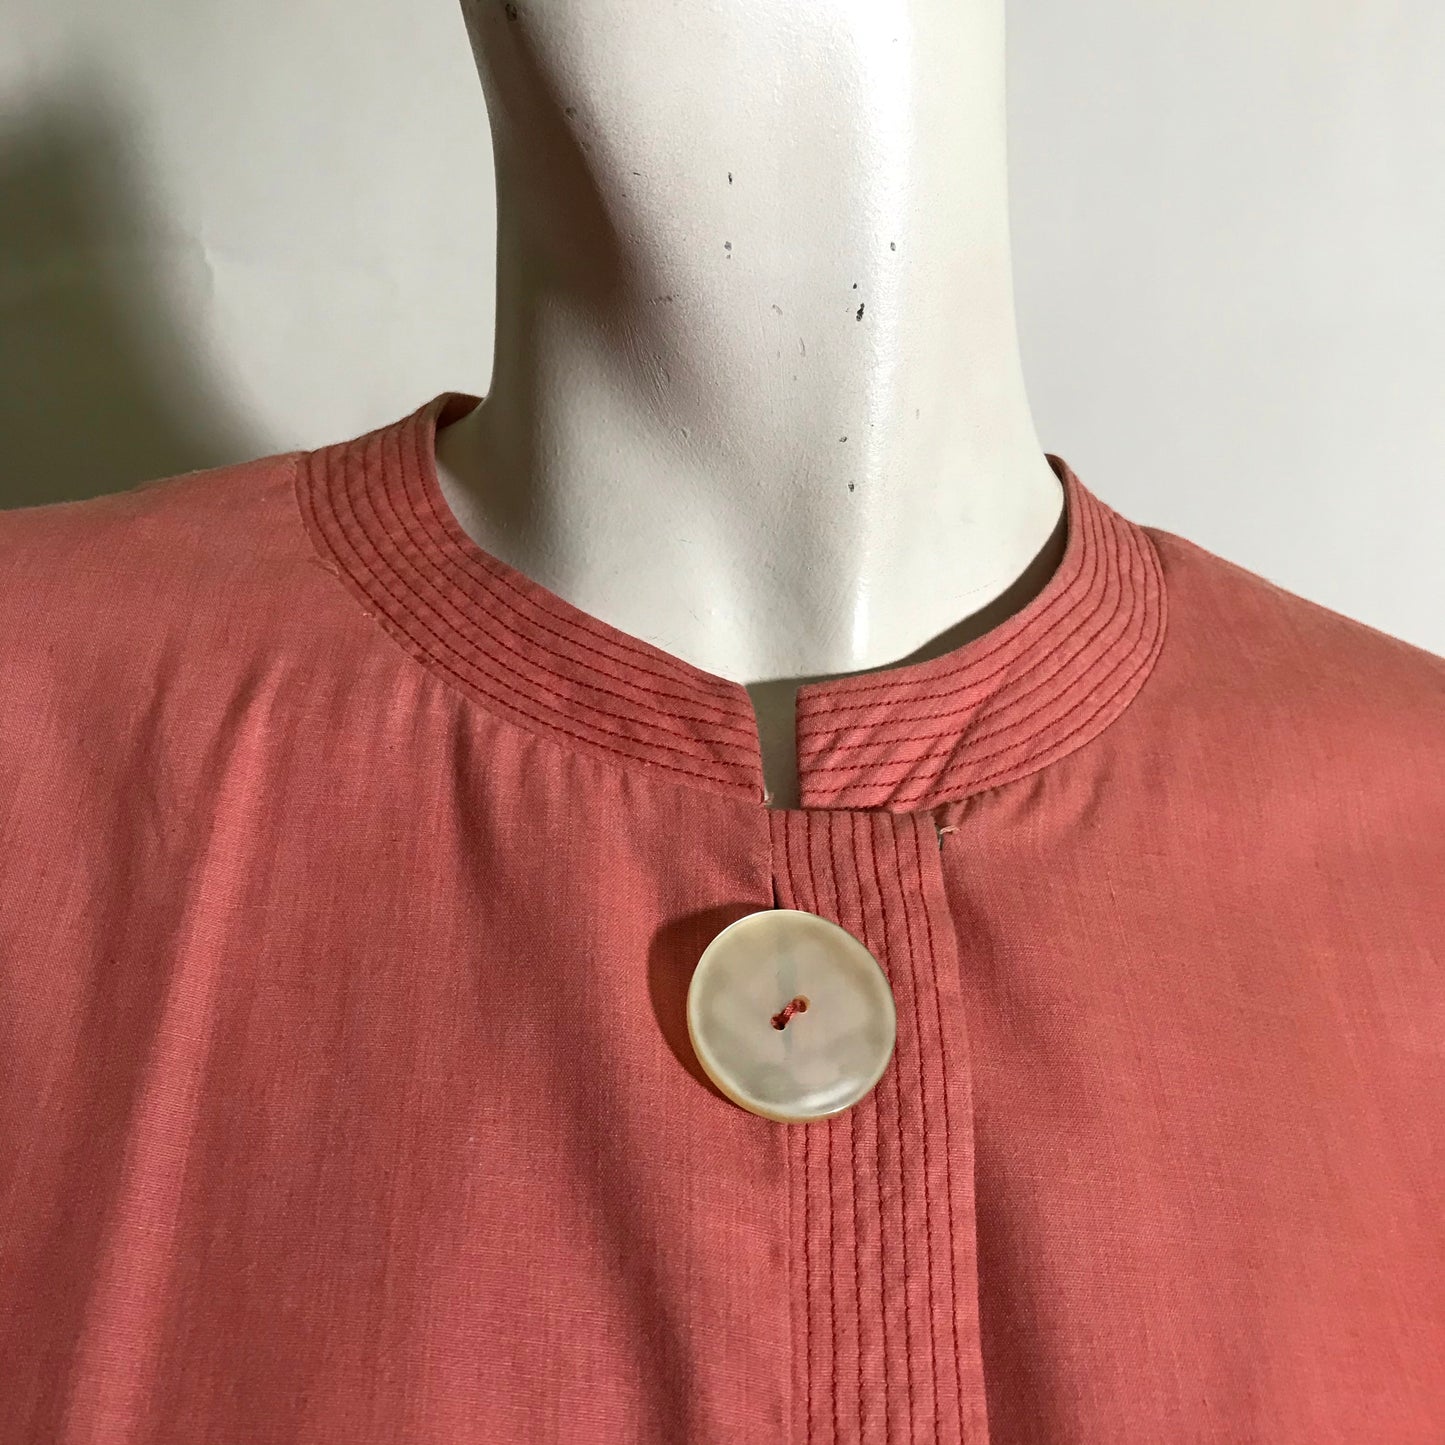 Cheery Coral Cotton Shirt Waist Dress w/ Big Buttons circa 1960s